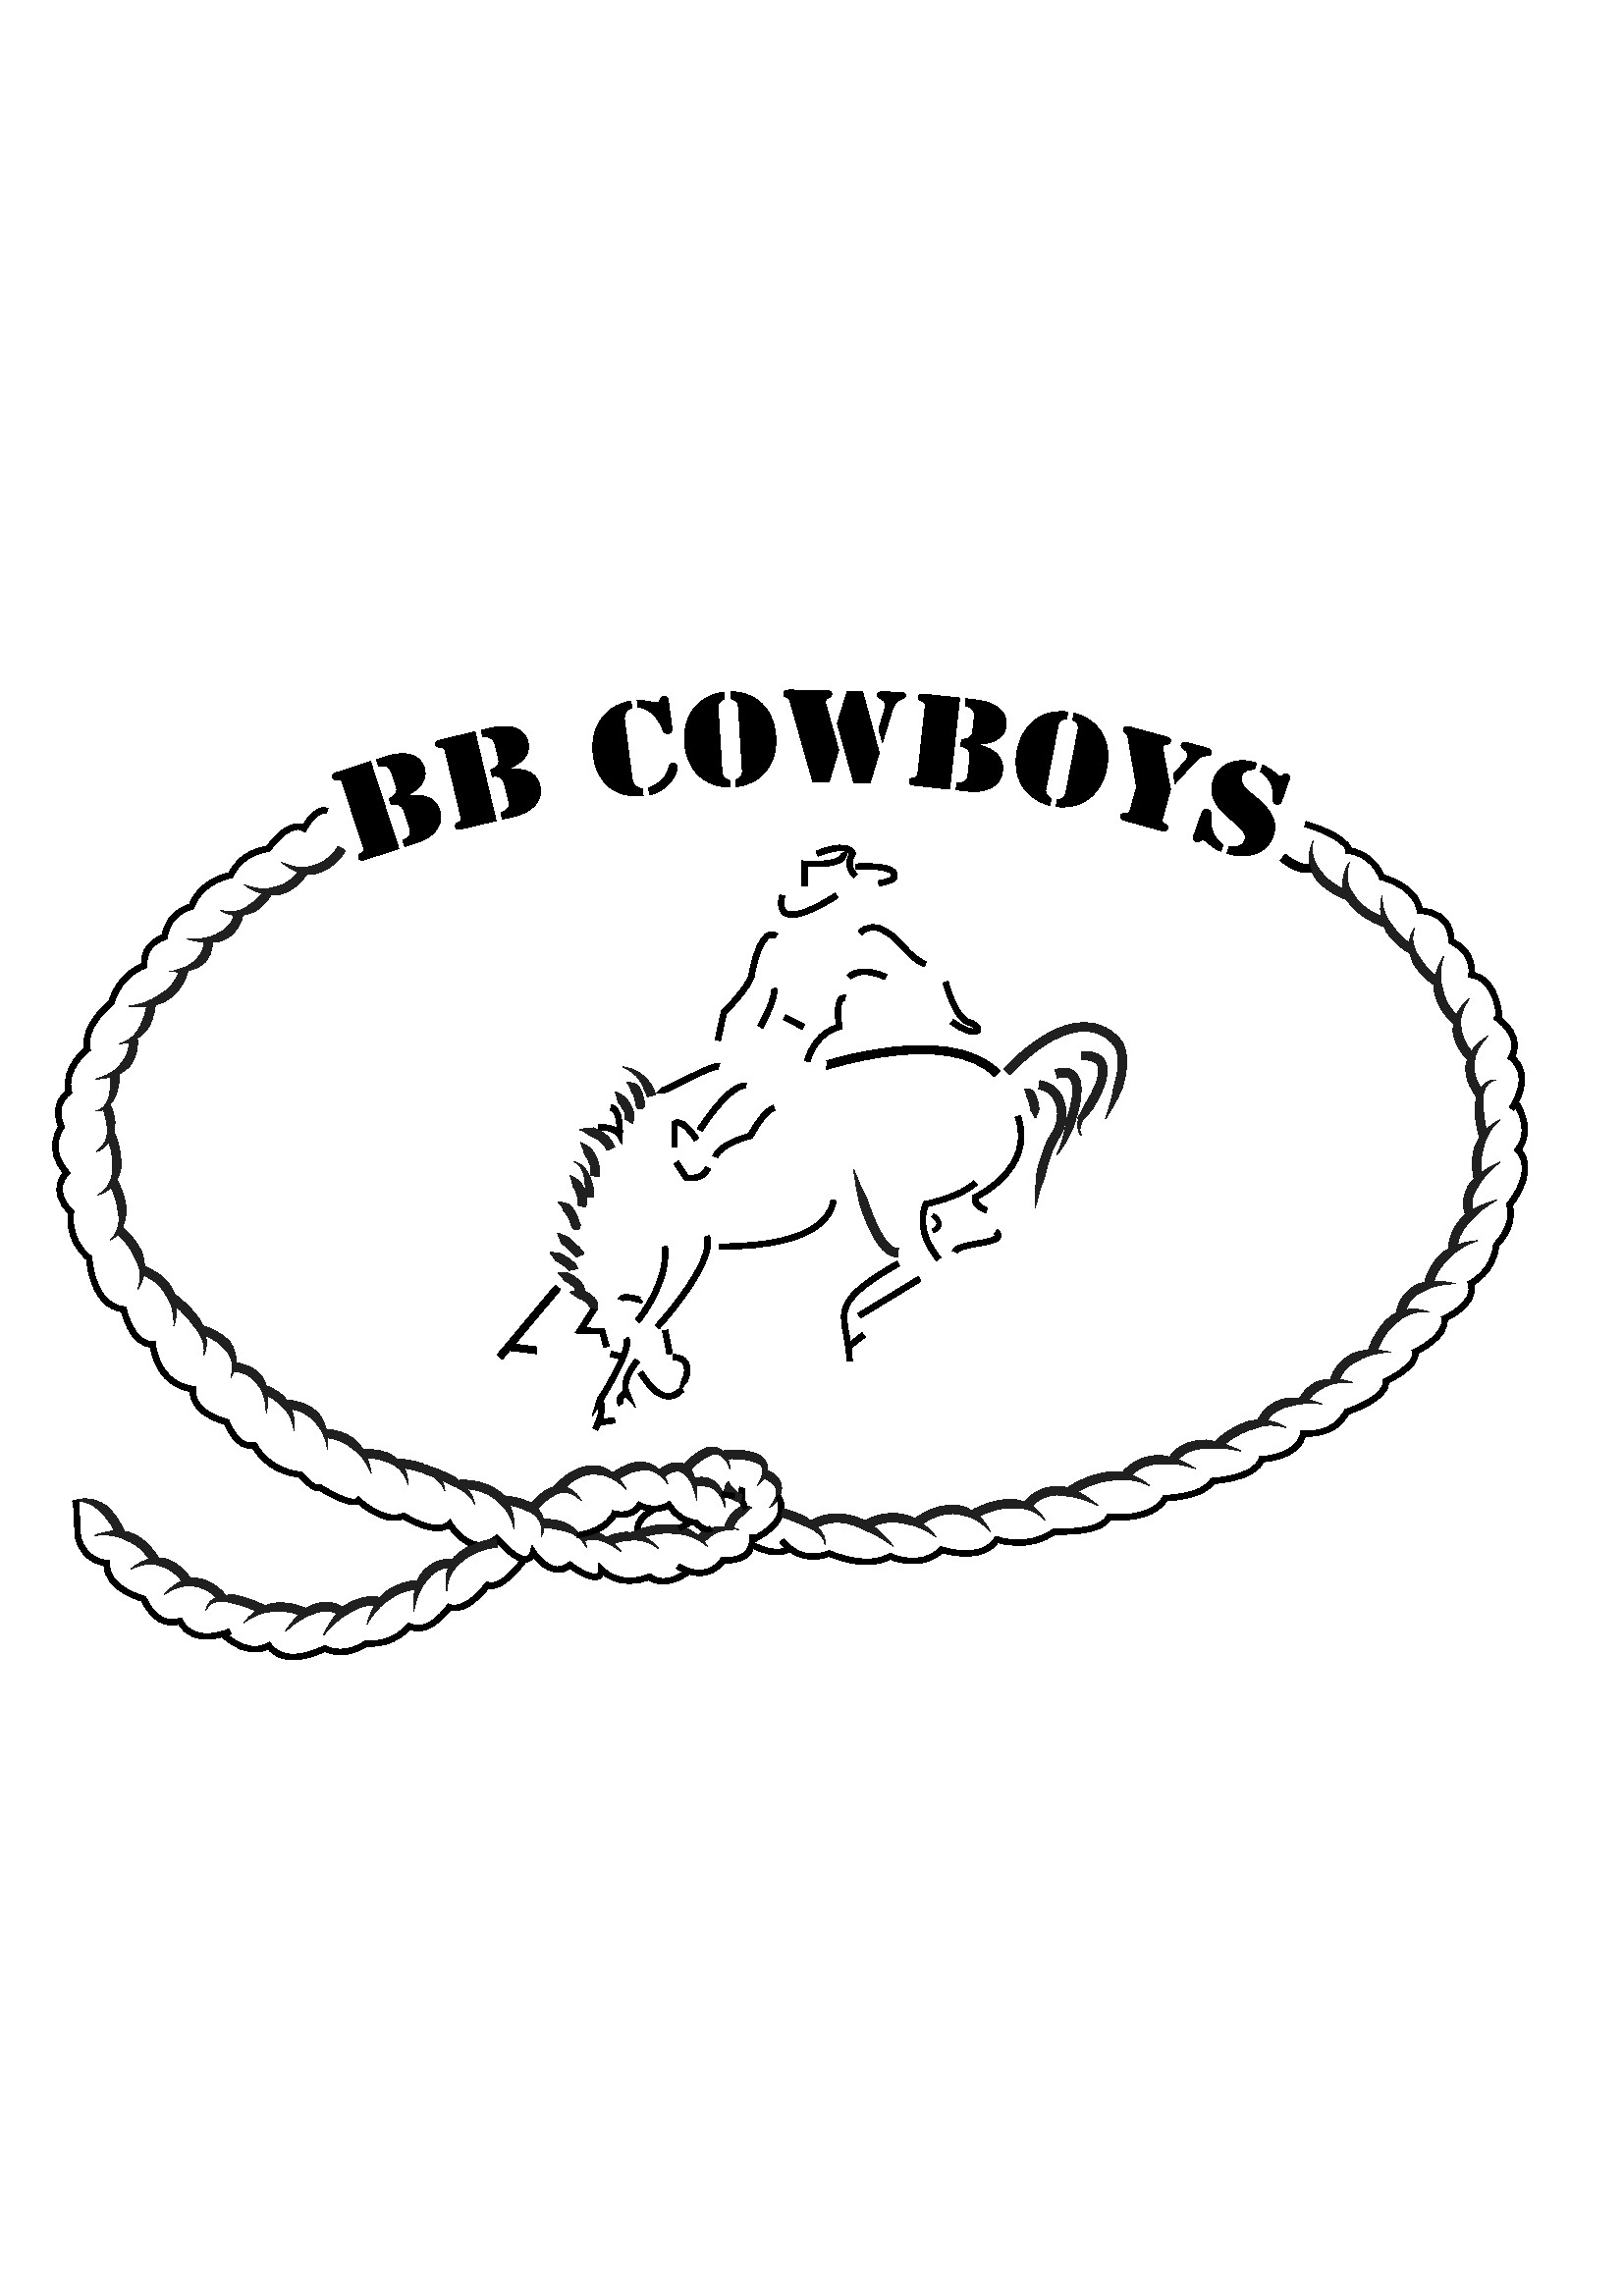 BB cowboys.jpg